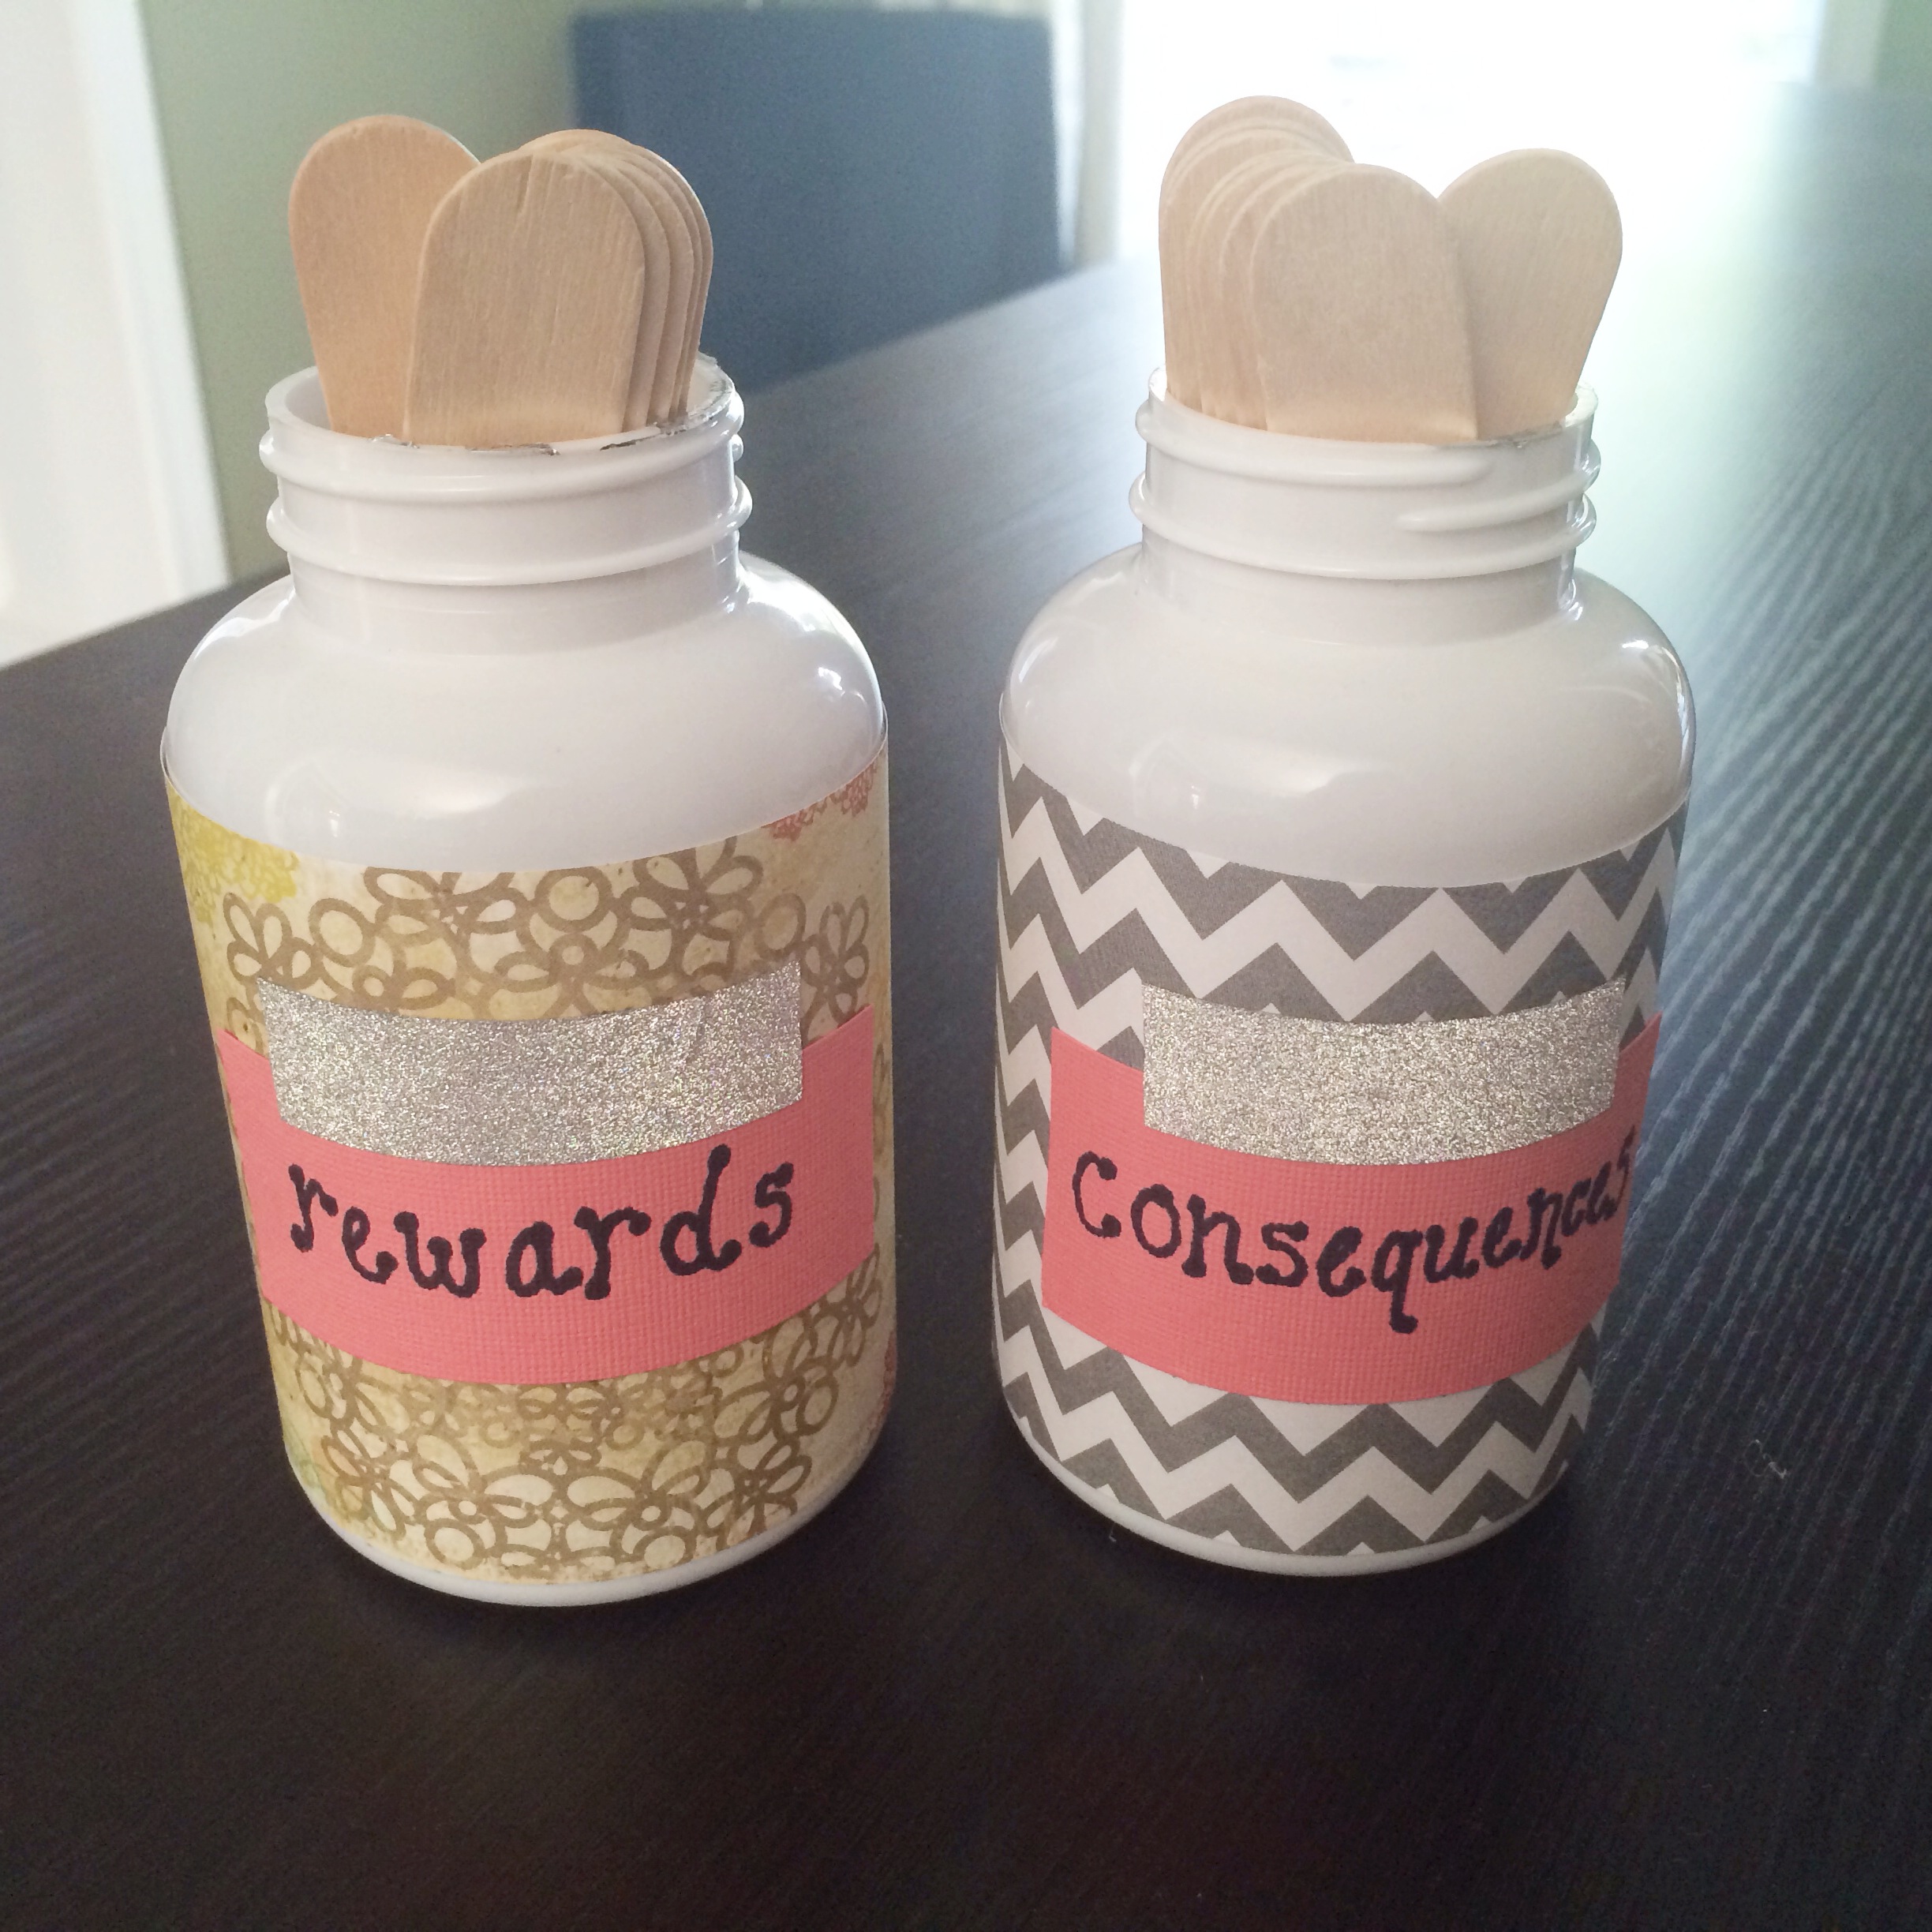 Consequence/reward jars, part of summer survival